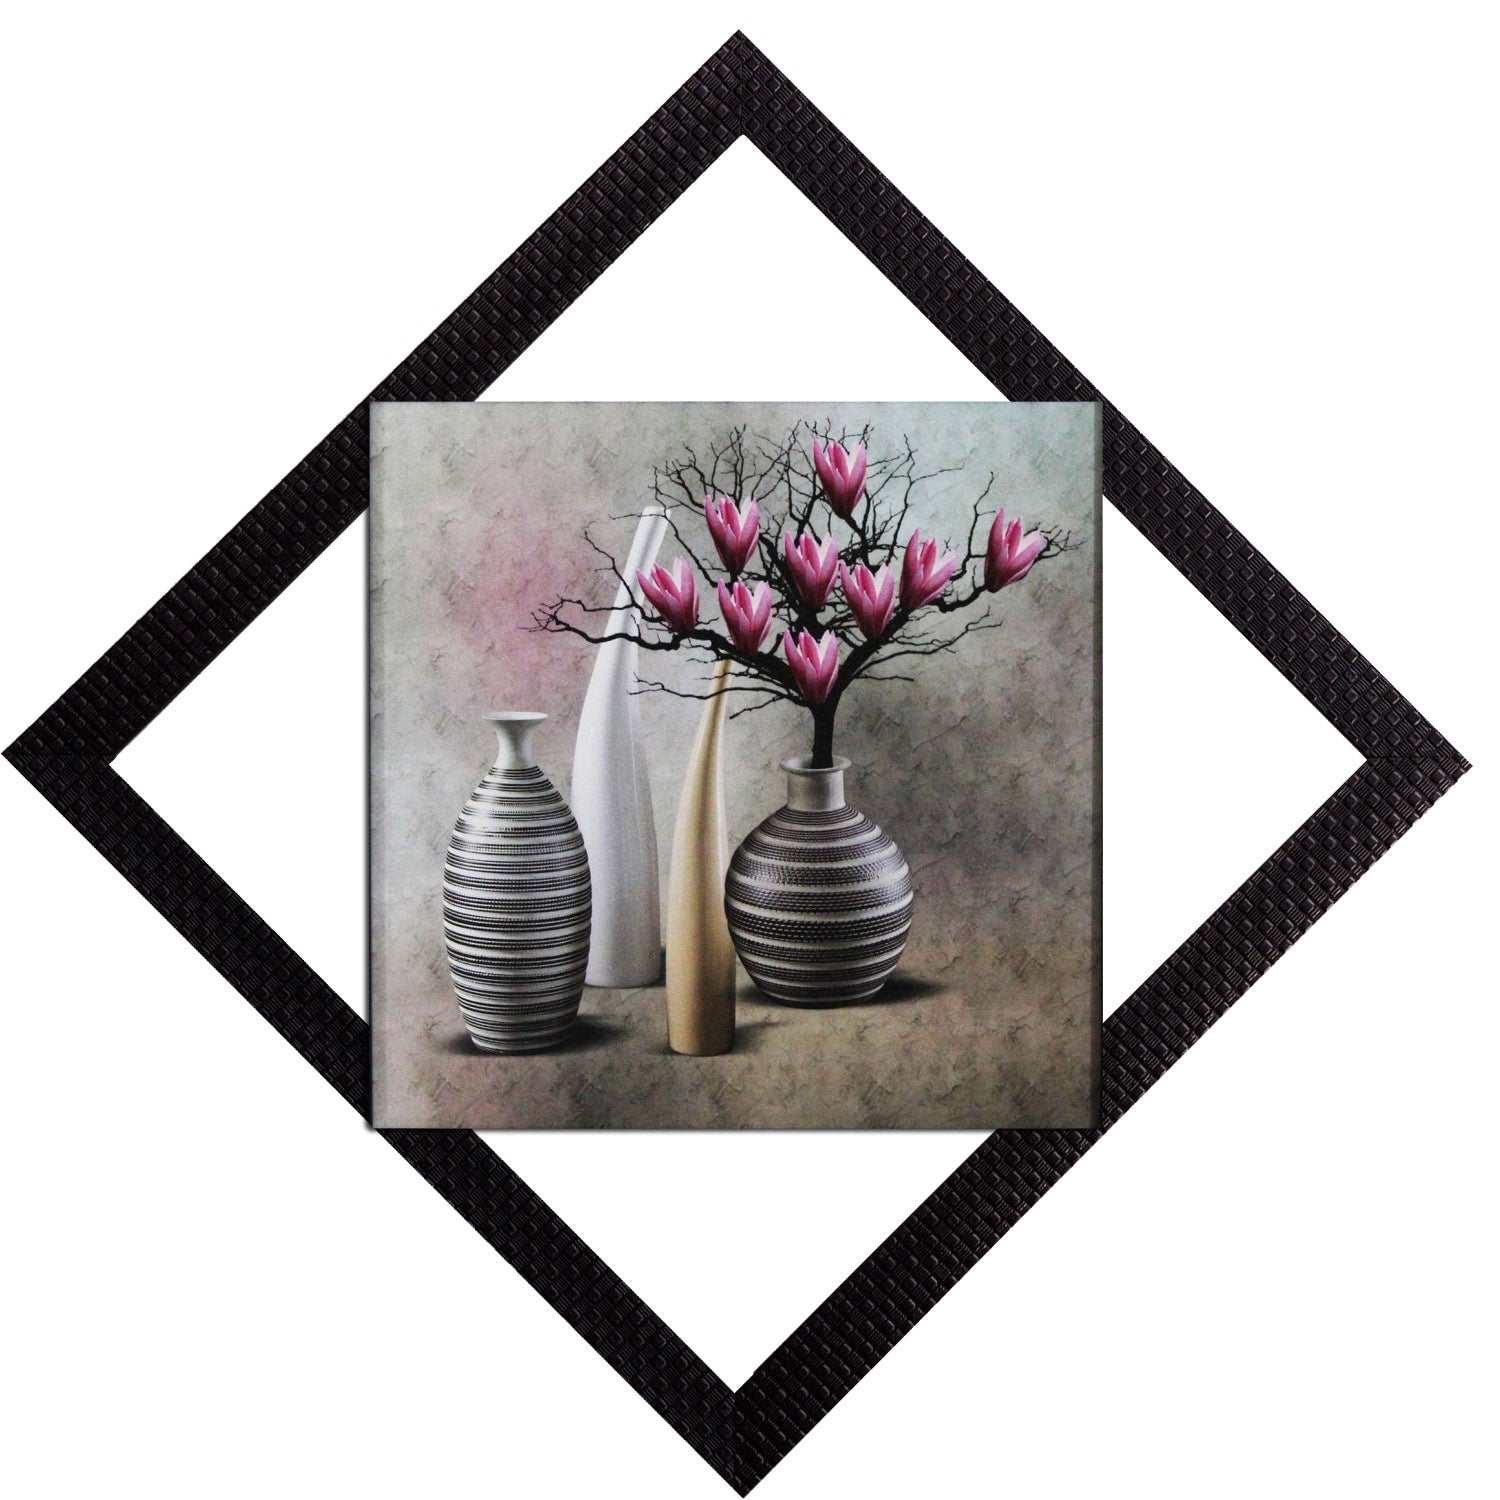 Vases With Flowers Satin Matt Texture UV Art Painting